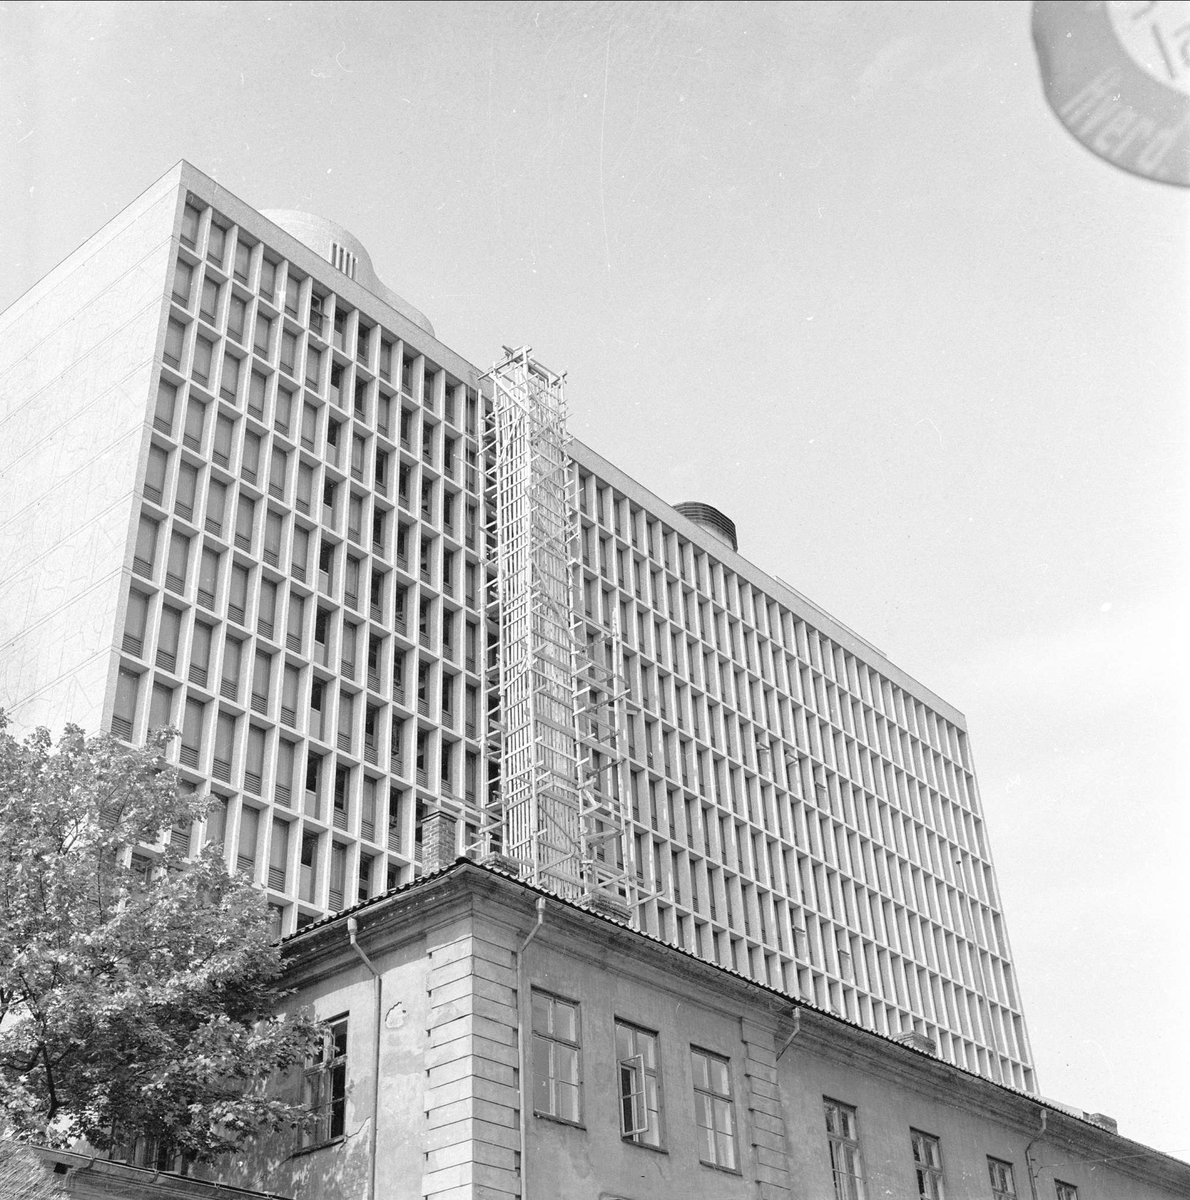 Regjeringsbygget under oppføring bak Justisdepartementets bygning, som før det var Rikshospitalets hovedbygning.
Akersgata, Oslo, juli 1958.